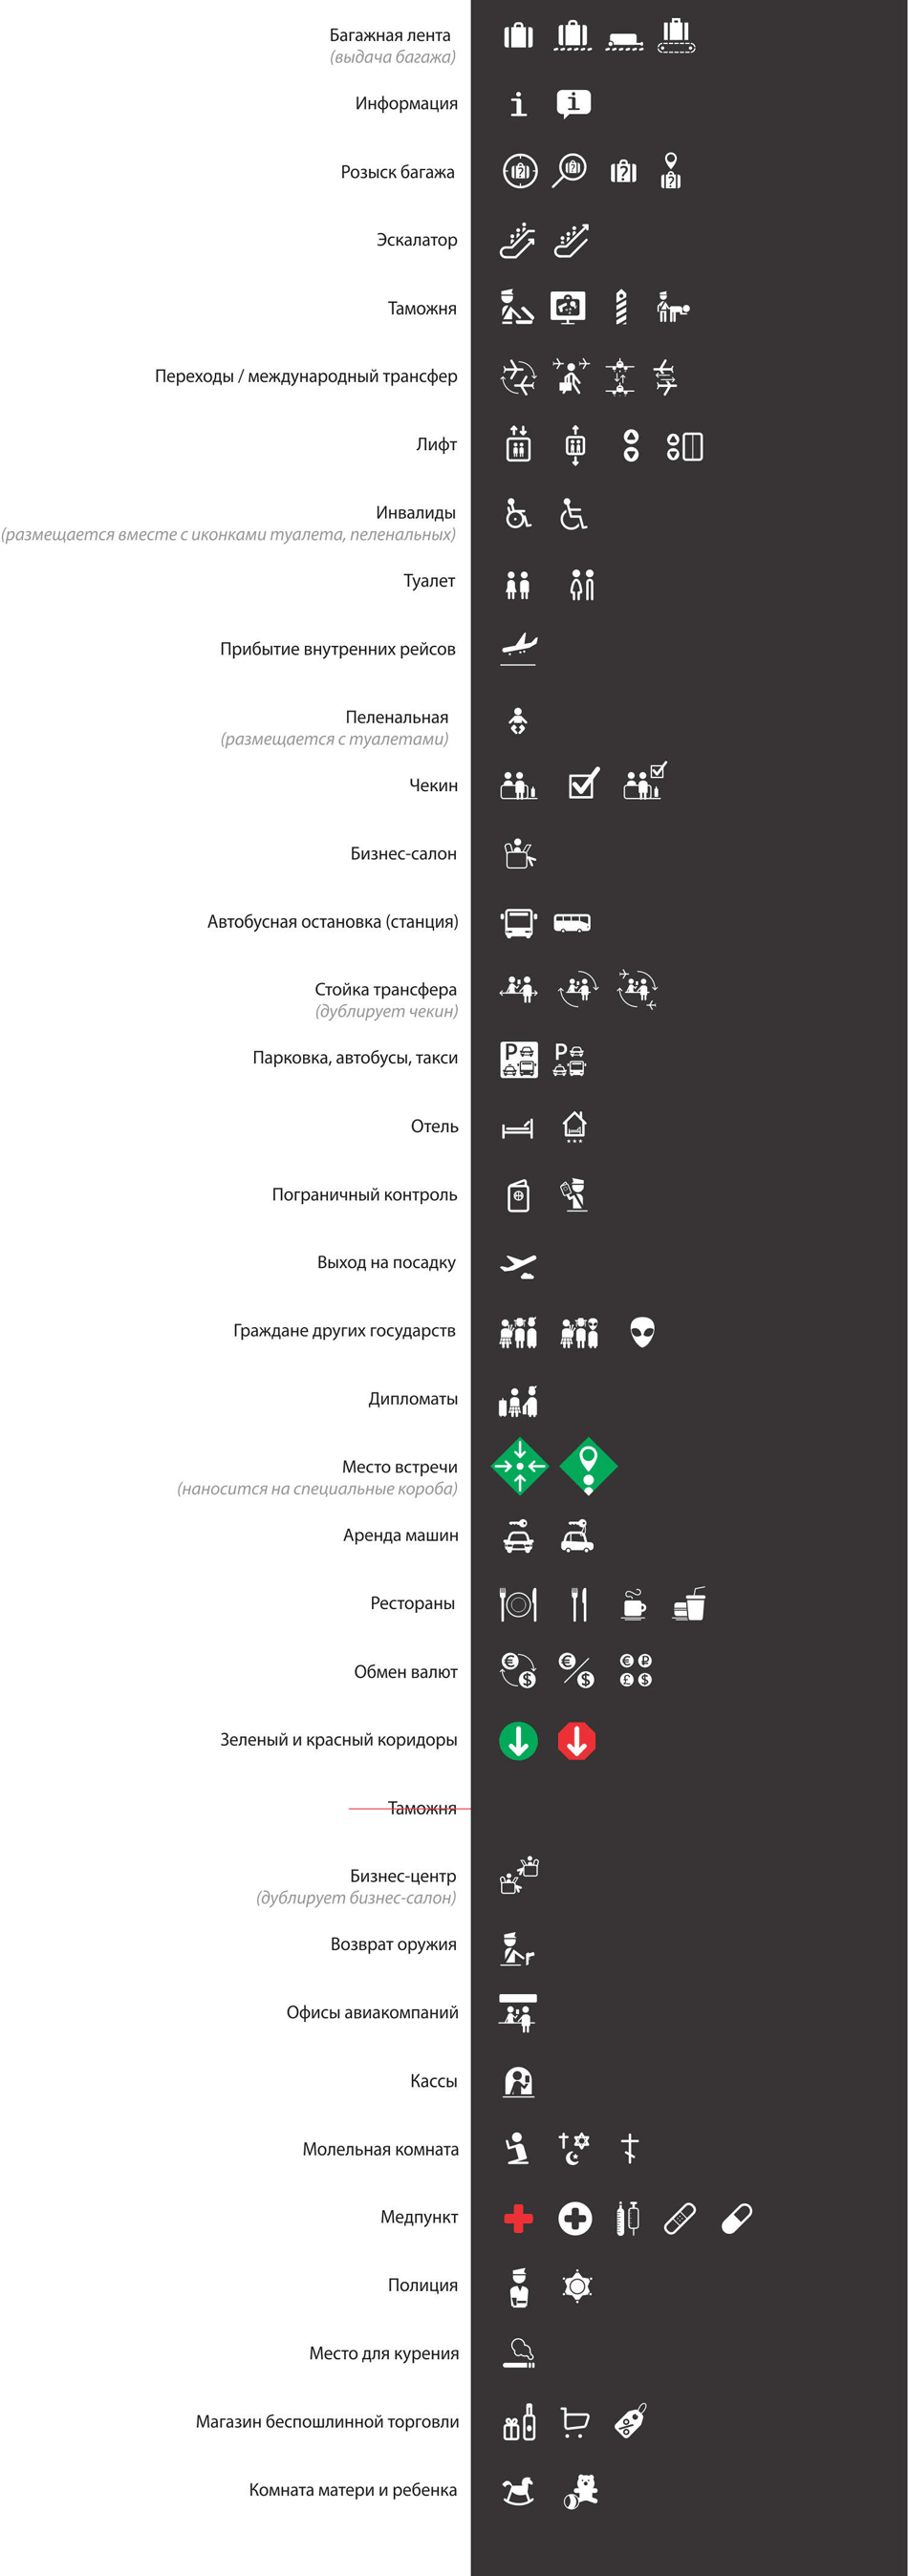 pulkovo navigation process icons 02